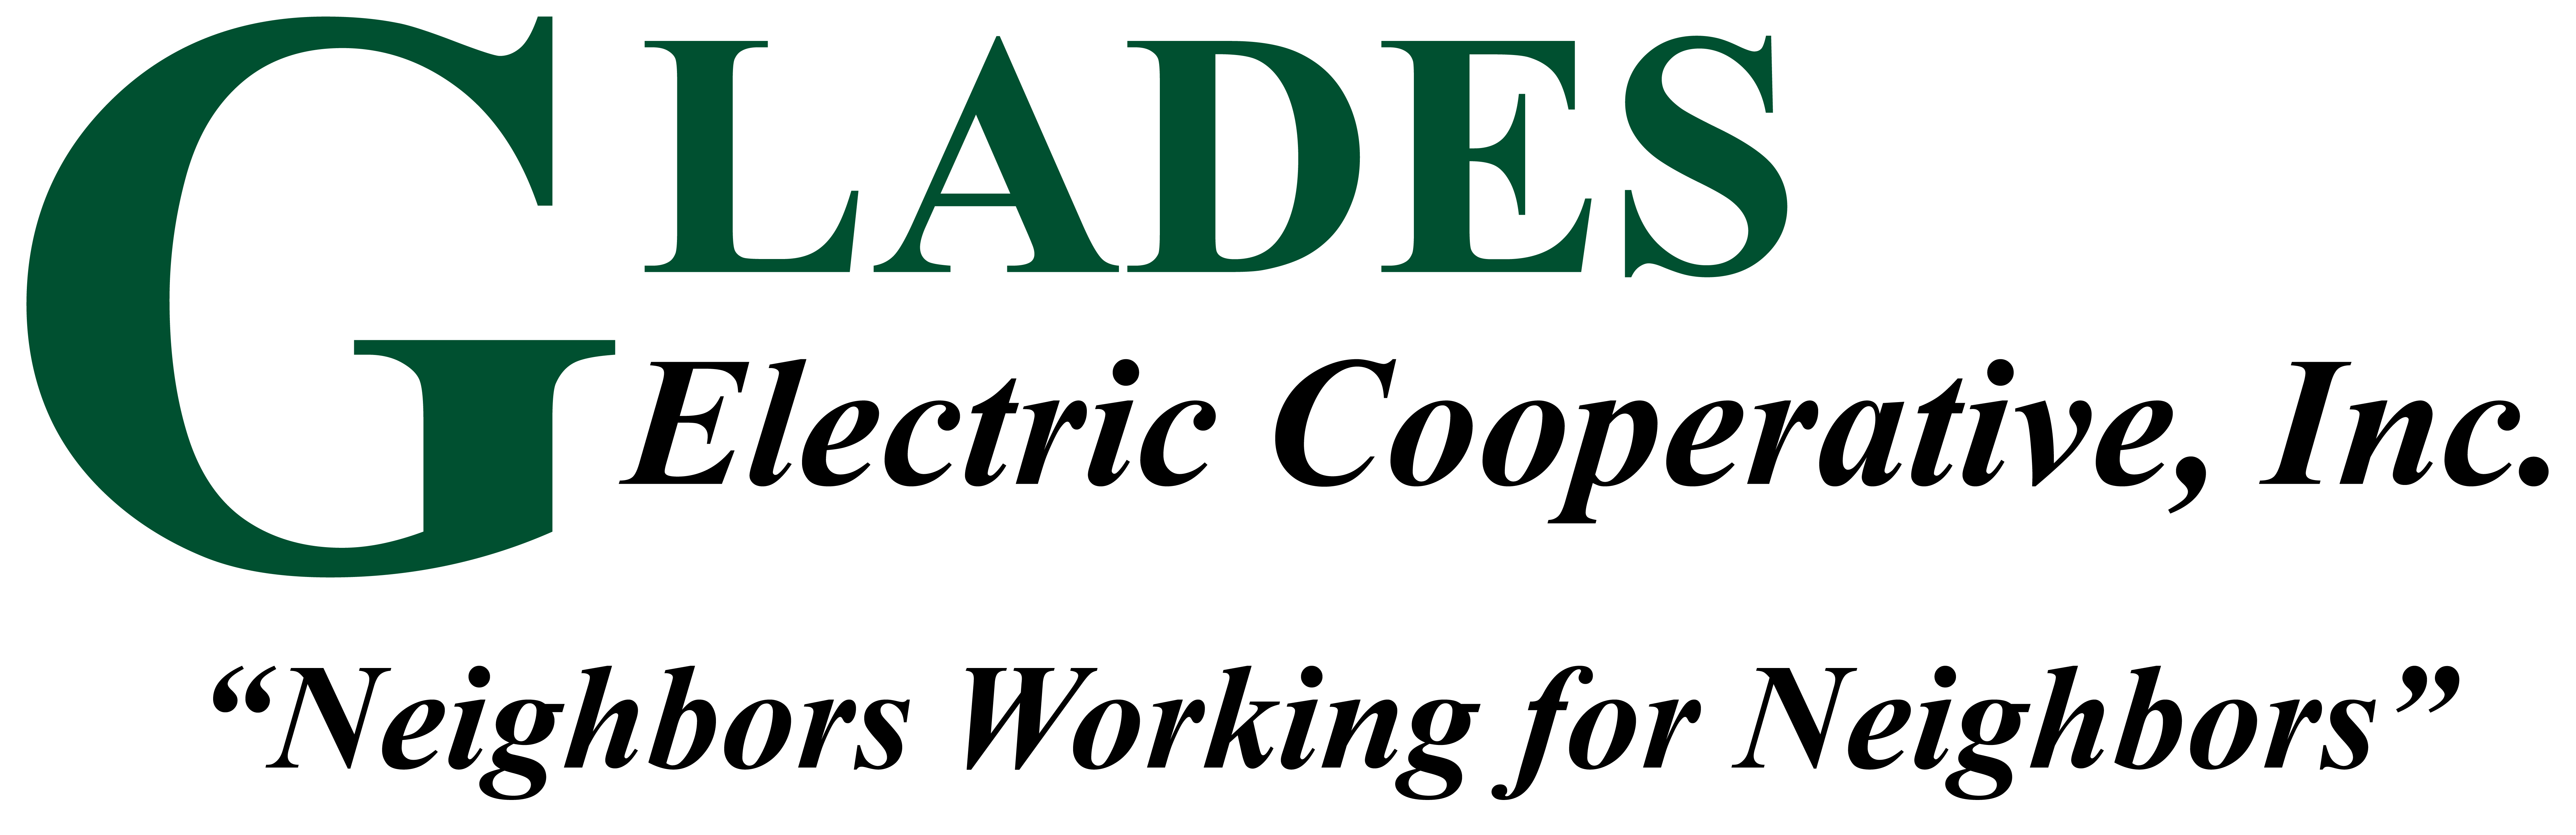 Glades-Electric-Cooperative-Chamber-Platinum-Partner-Logo